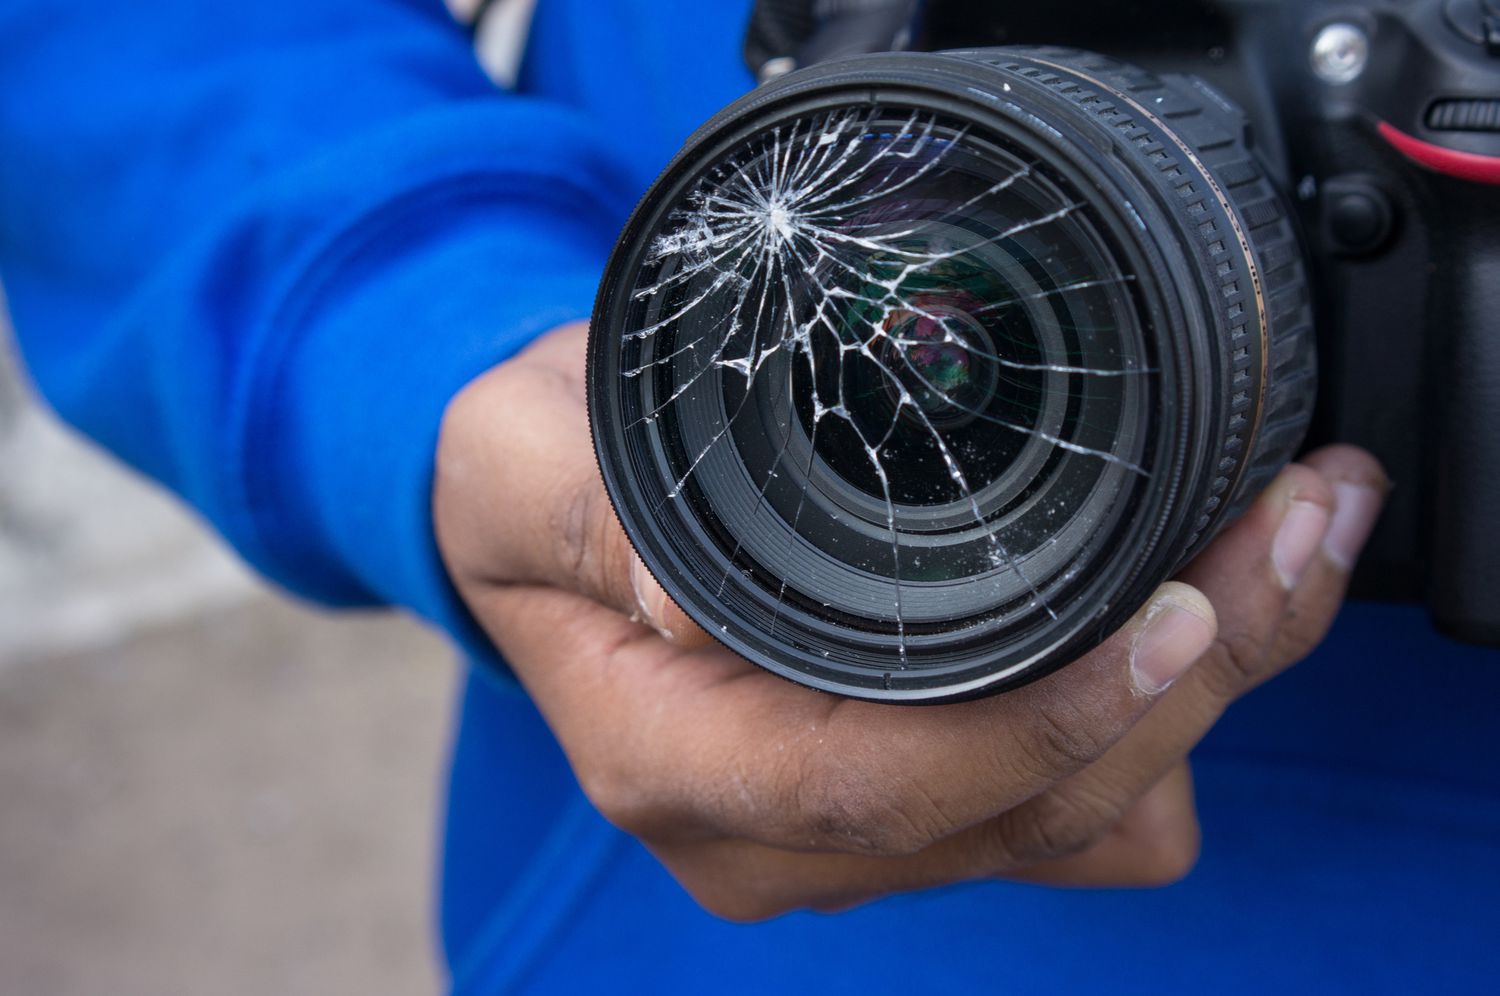 how-to-fix-a-broken-dslr-camera-lens-that-fell-off